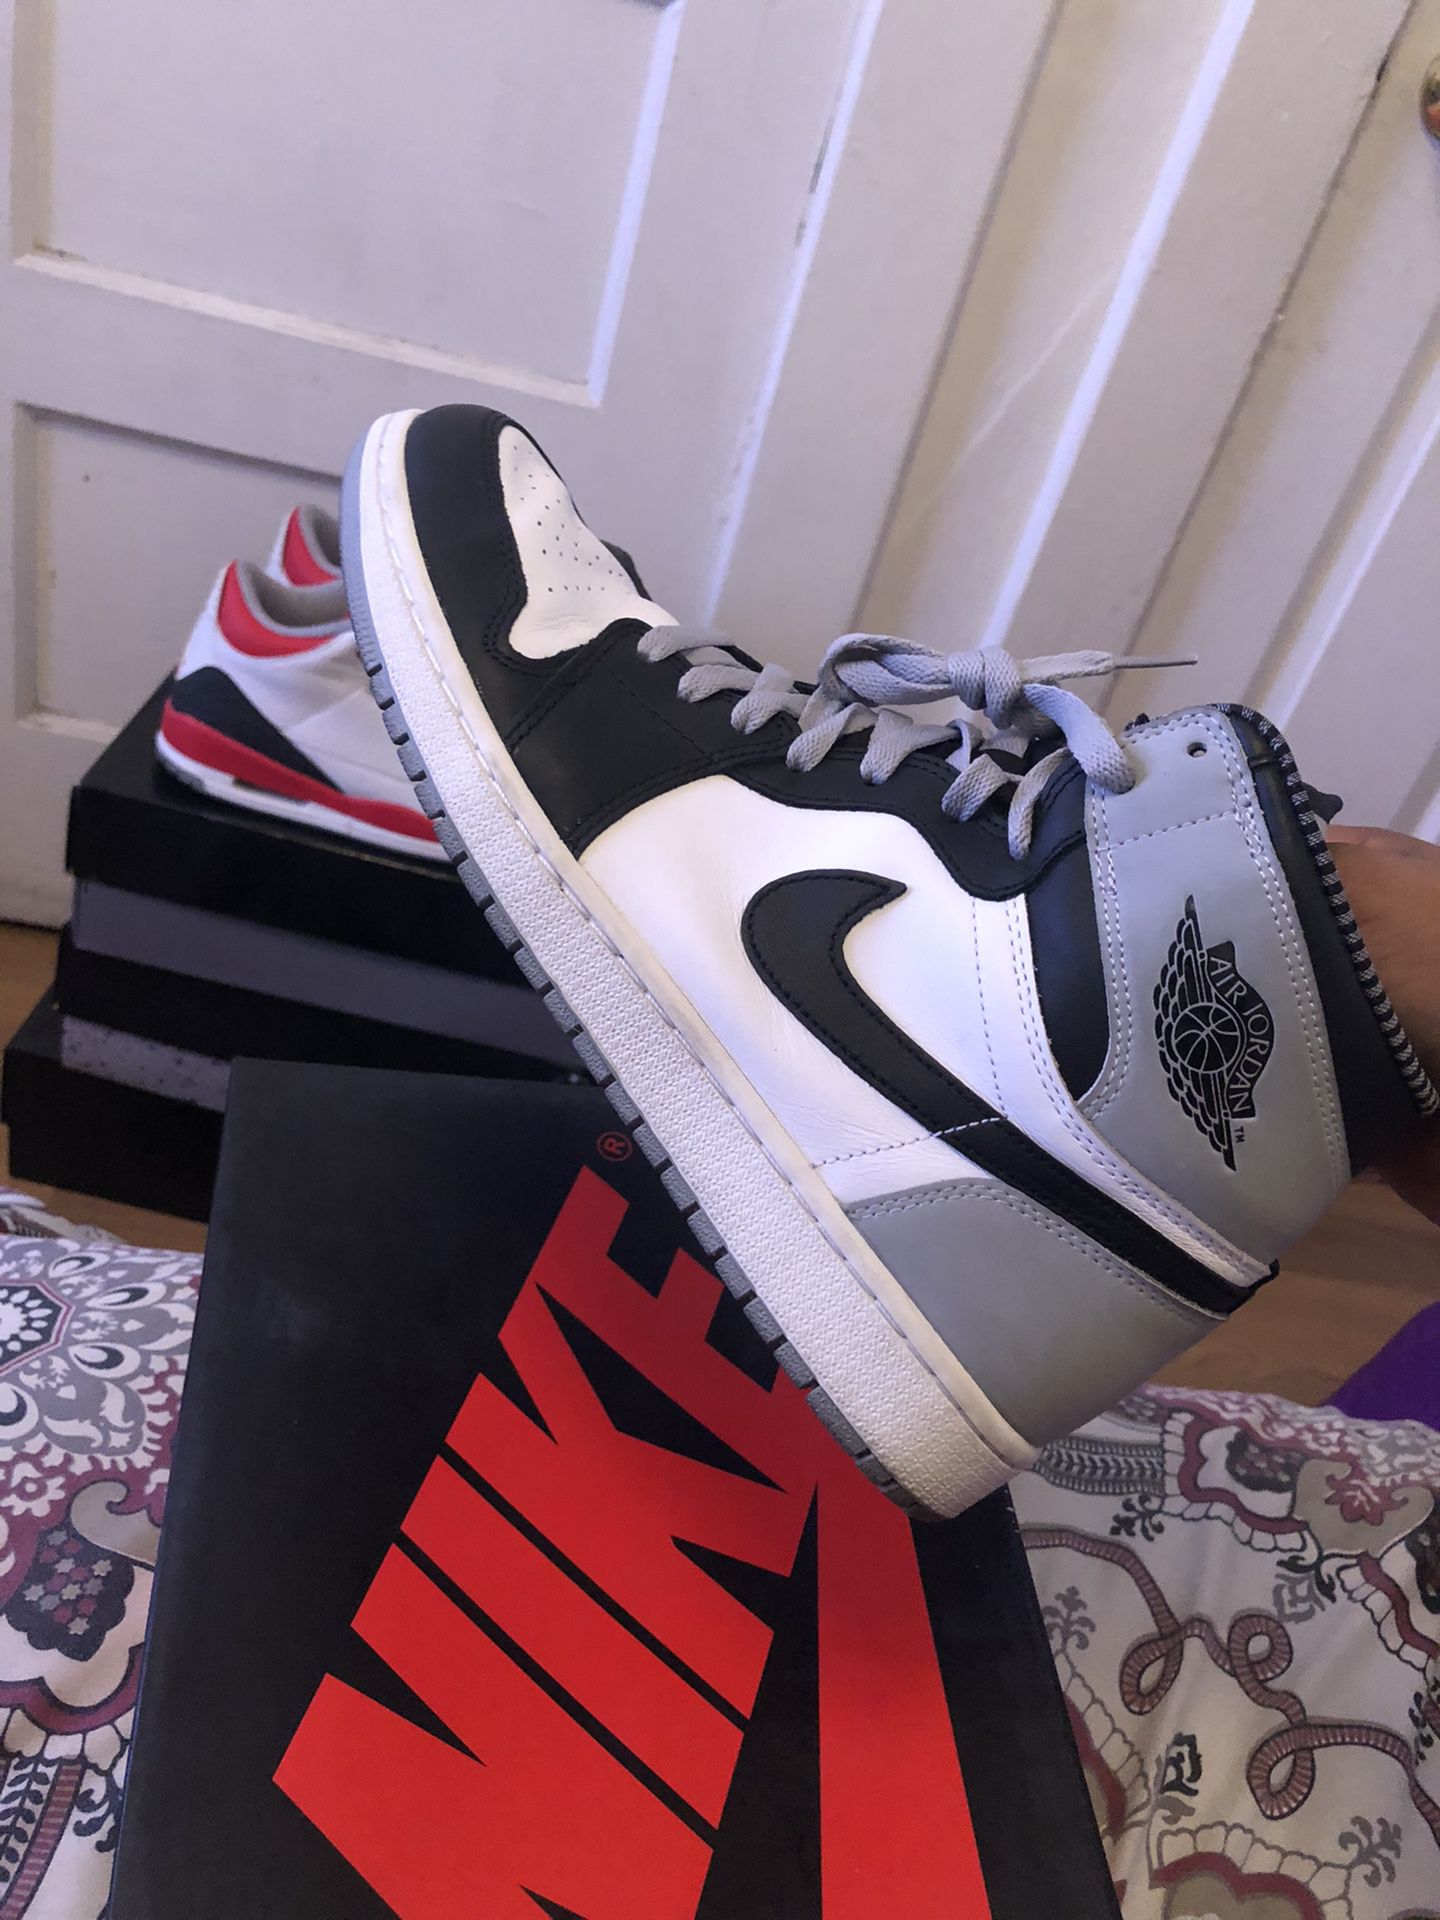 Nike air Jordan retro 1 sz 10.5 baron sz 10.5 worn